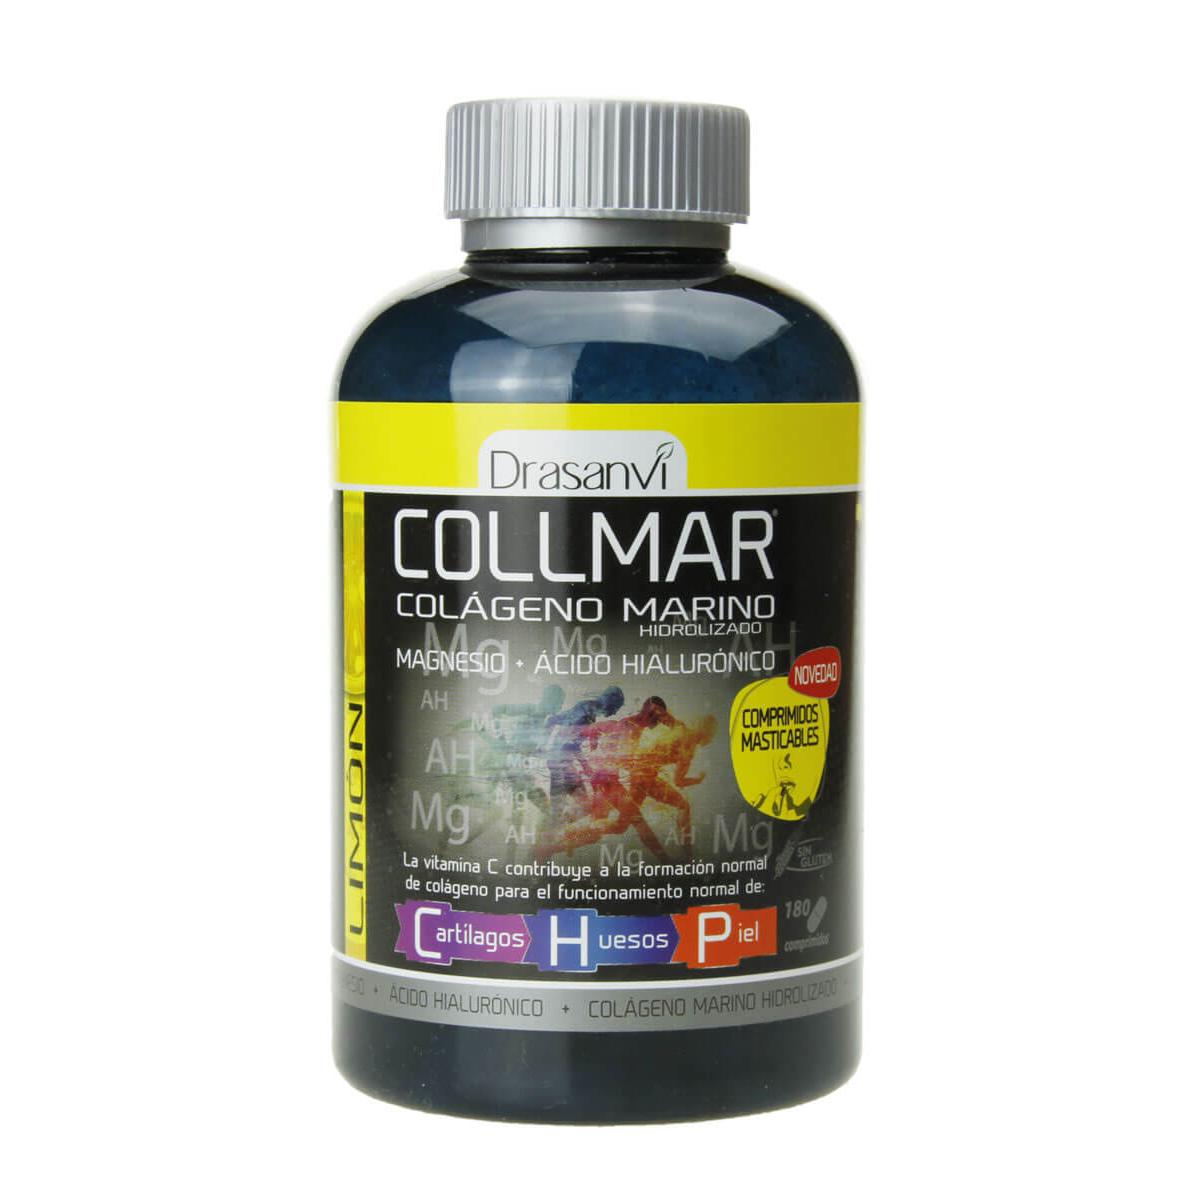 Collmar - Collmar colágeno marino sabor limón 180 comprimidos masticables